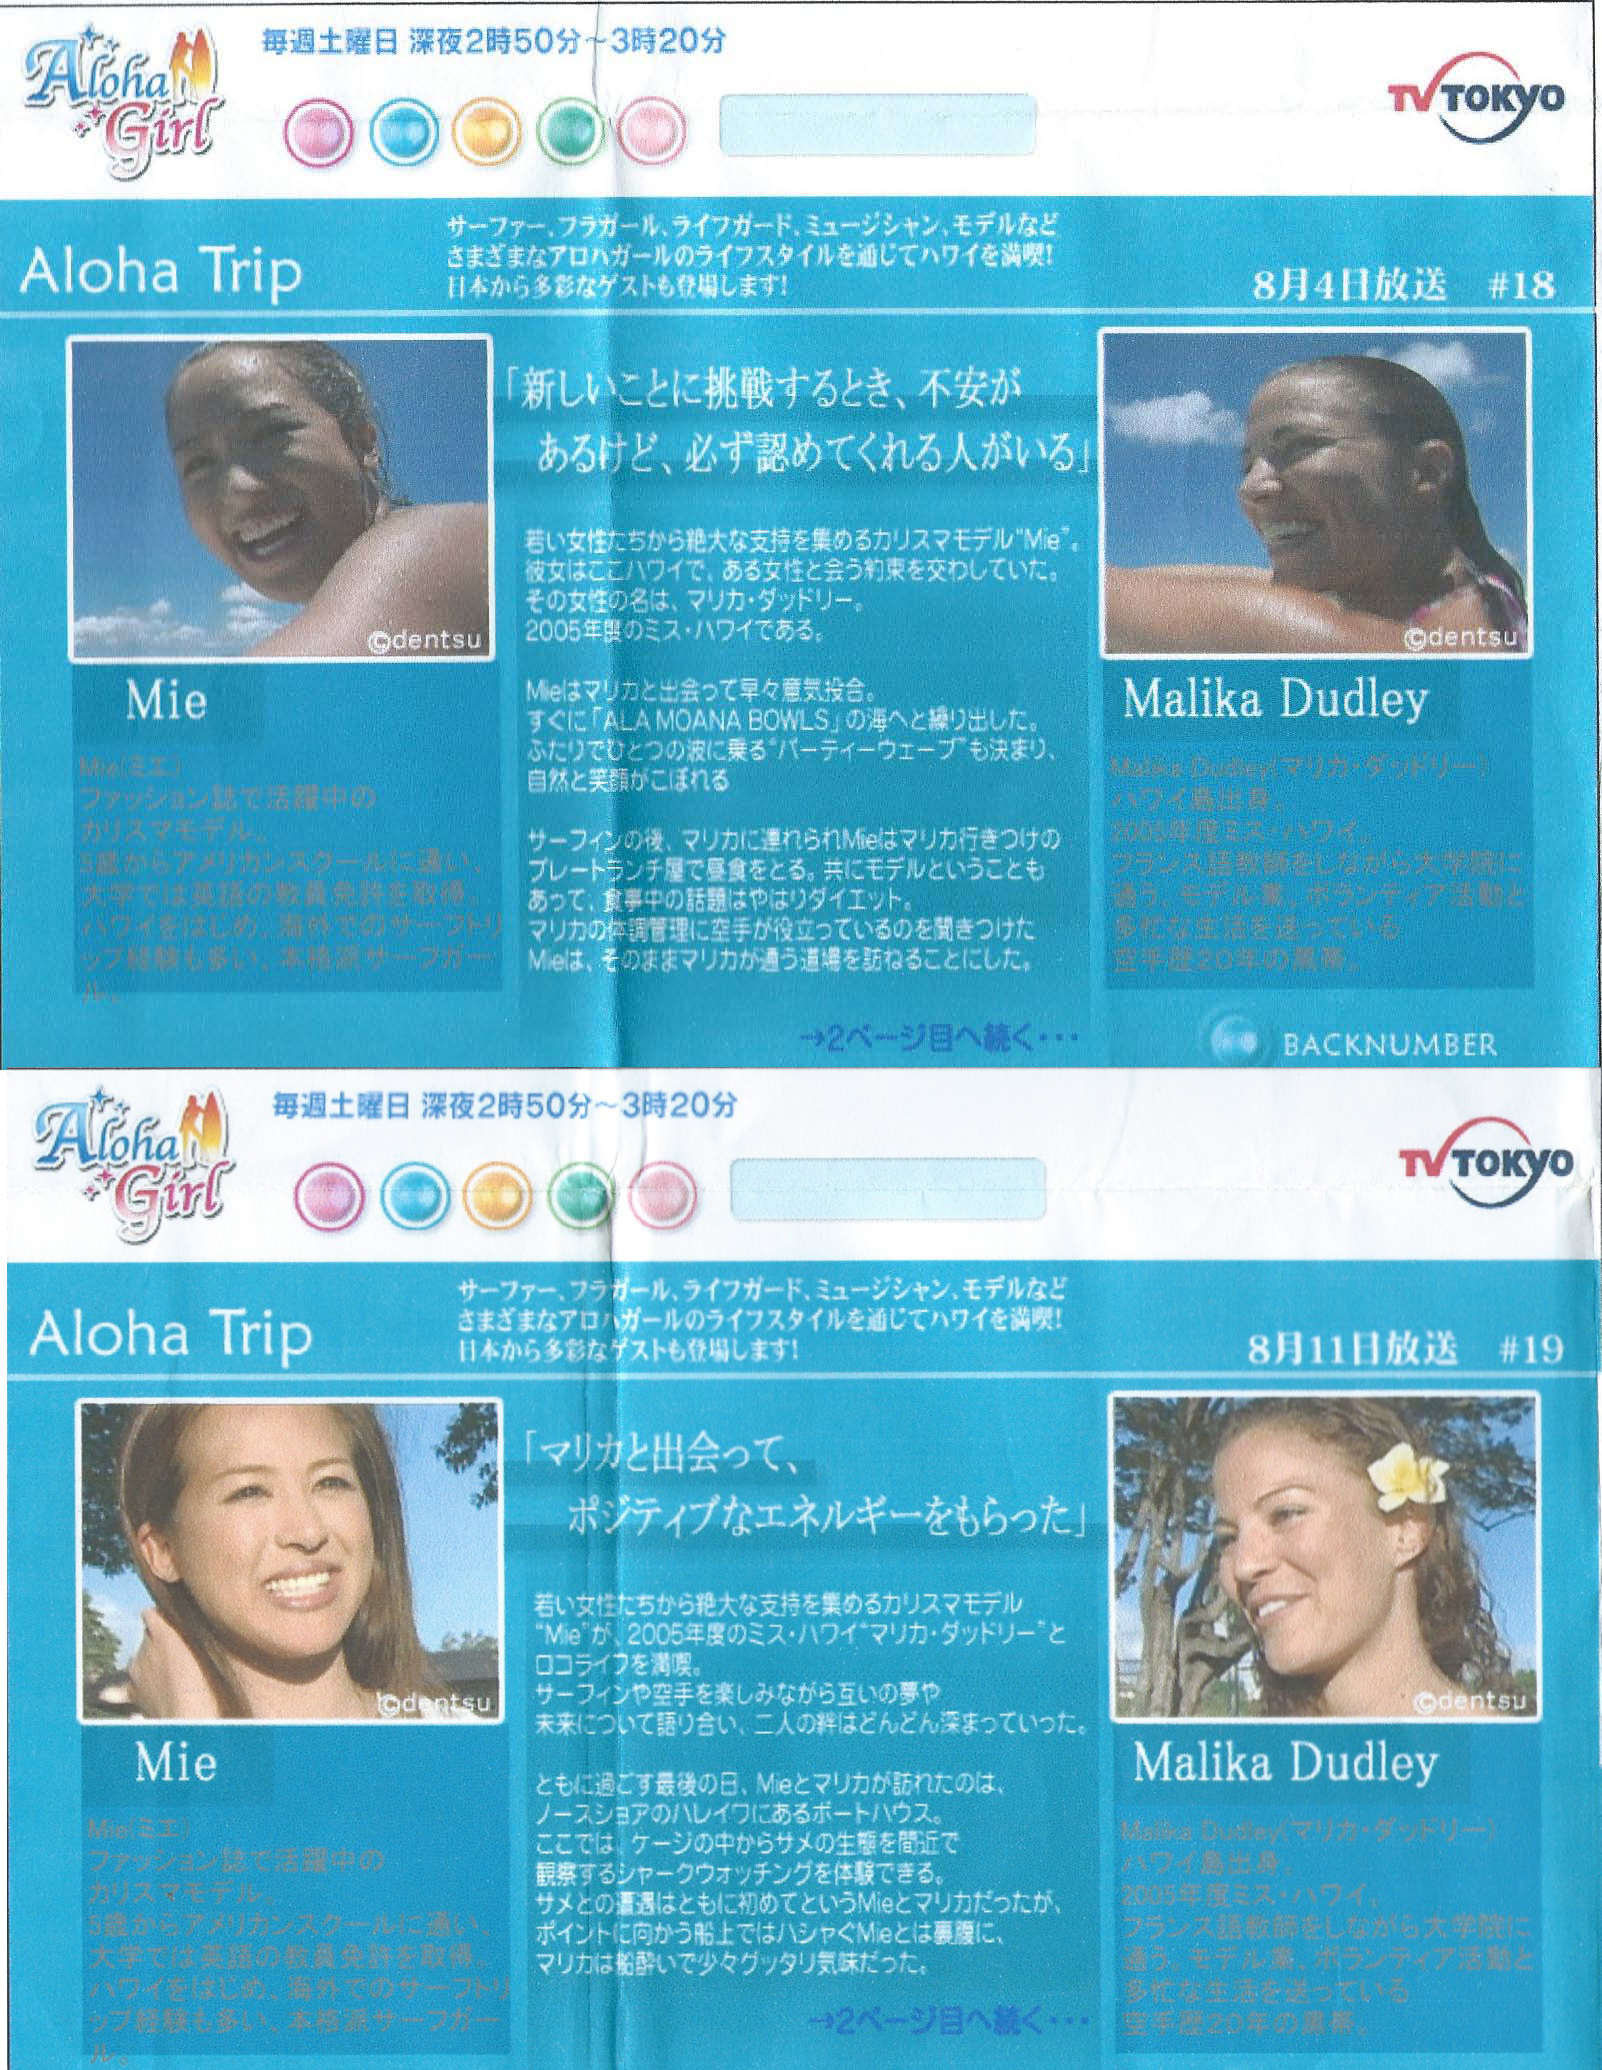 Aloha Girl Tokyo: Japanese TV